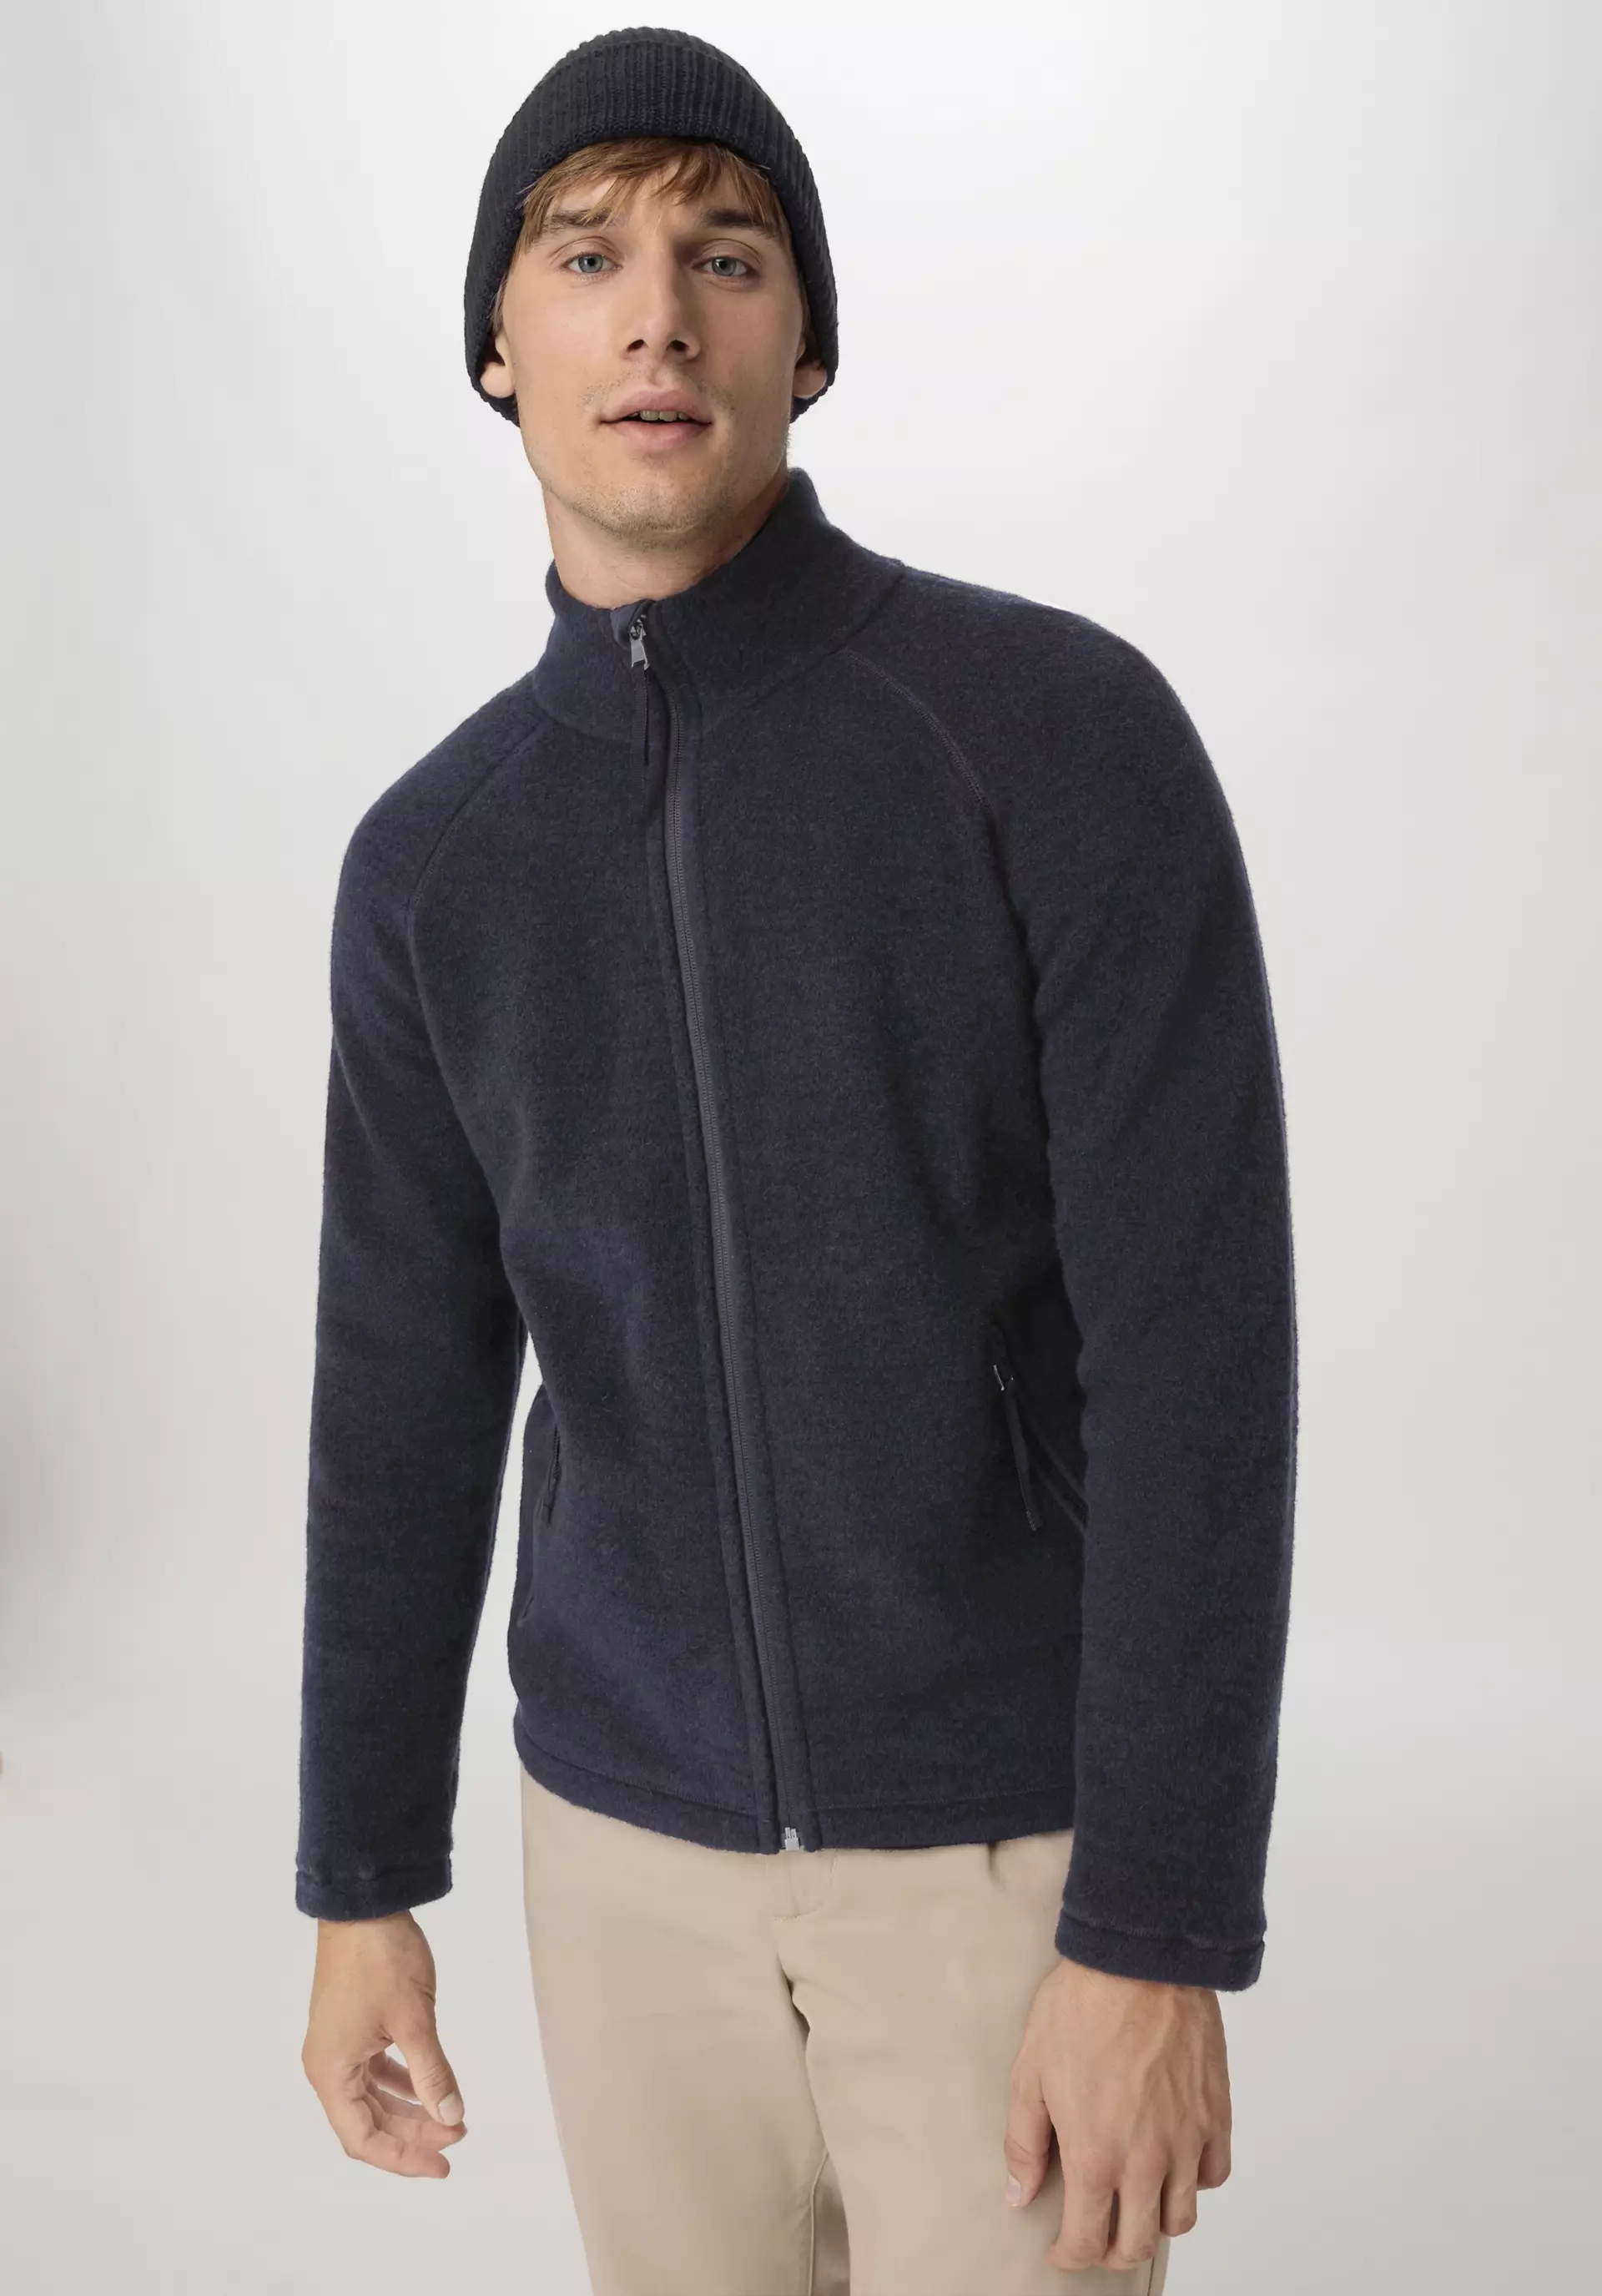 Relaxed wool fleece jacket made from pure organic merino wool 55015